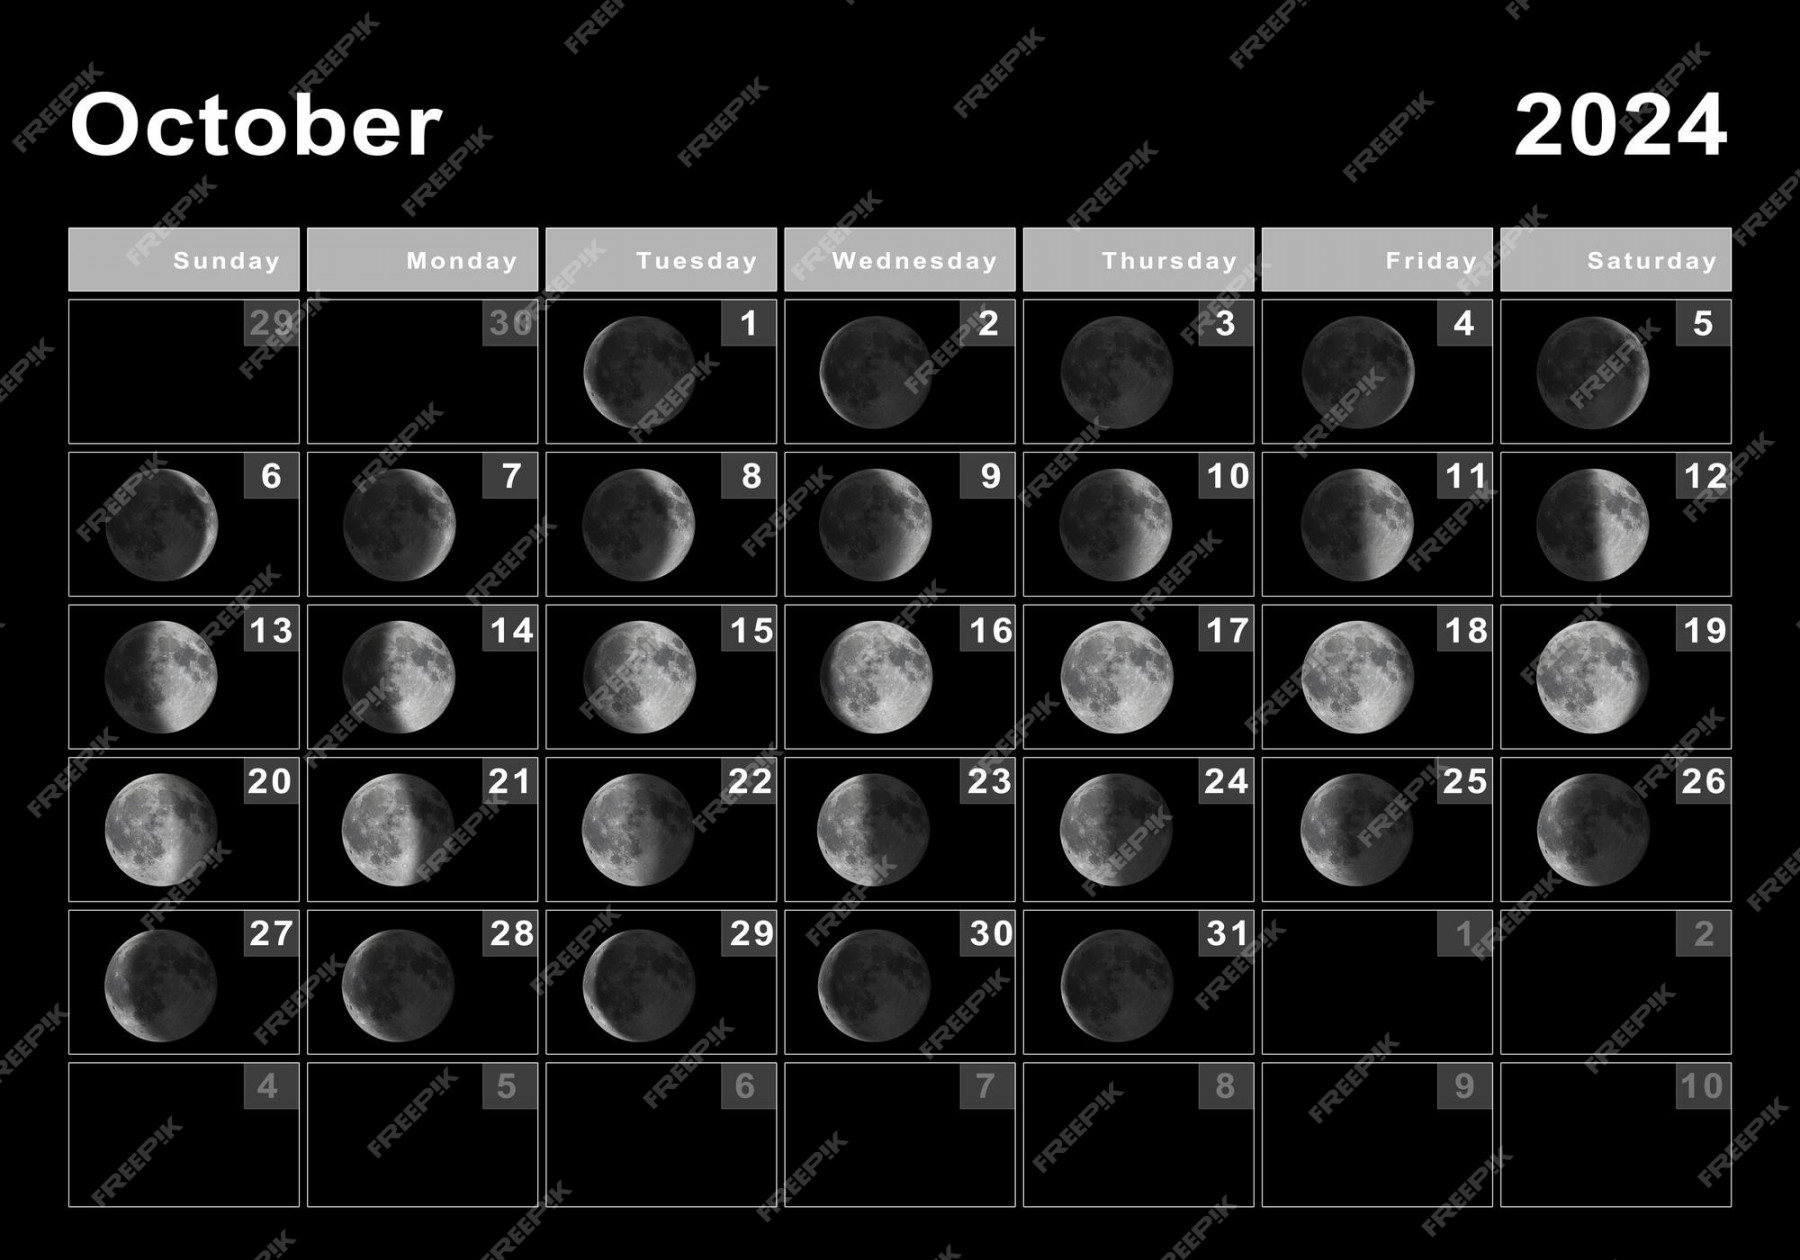 Premium Photo October lunar calendar, moon cycles, moon phases